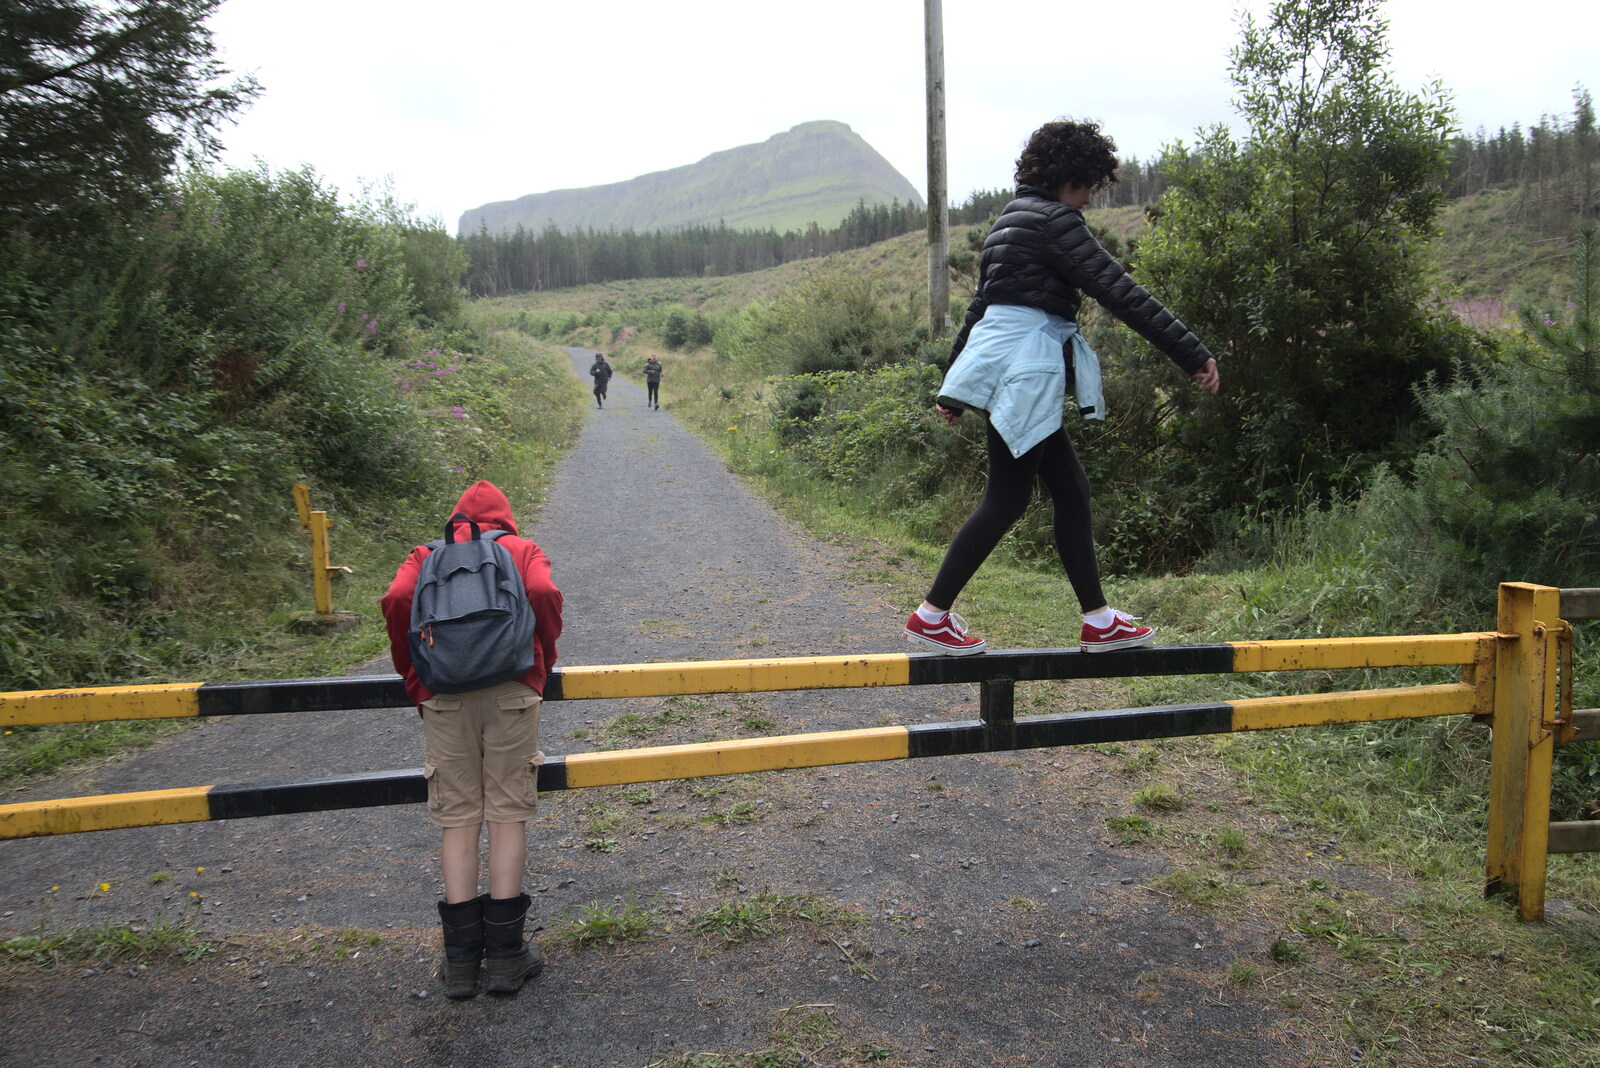 Fern walks on a barrier from Walks Around Benbulben and Carrowmore, County Sligo, Ireland - 13th August 2021